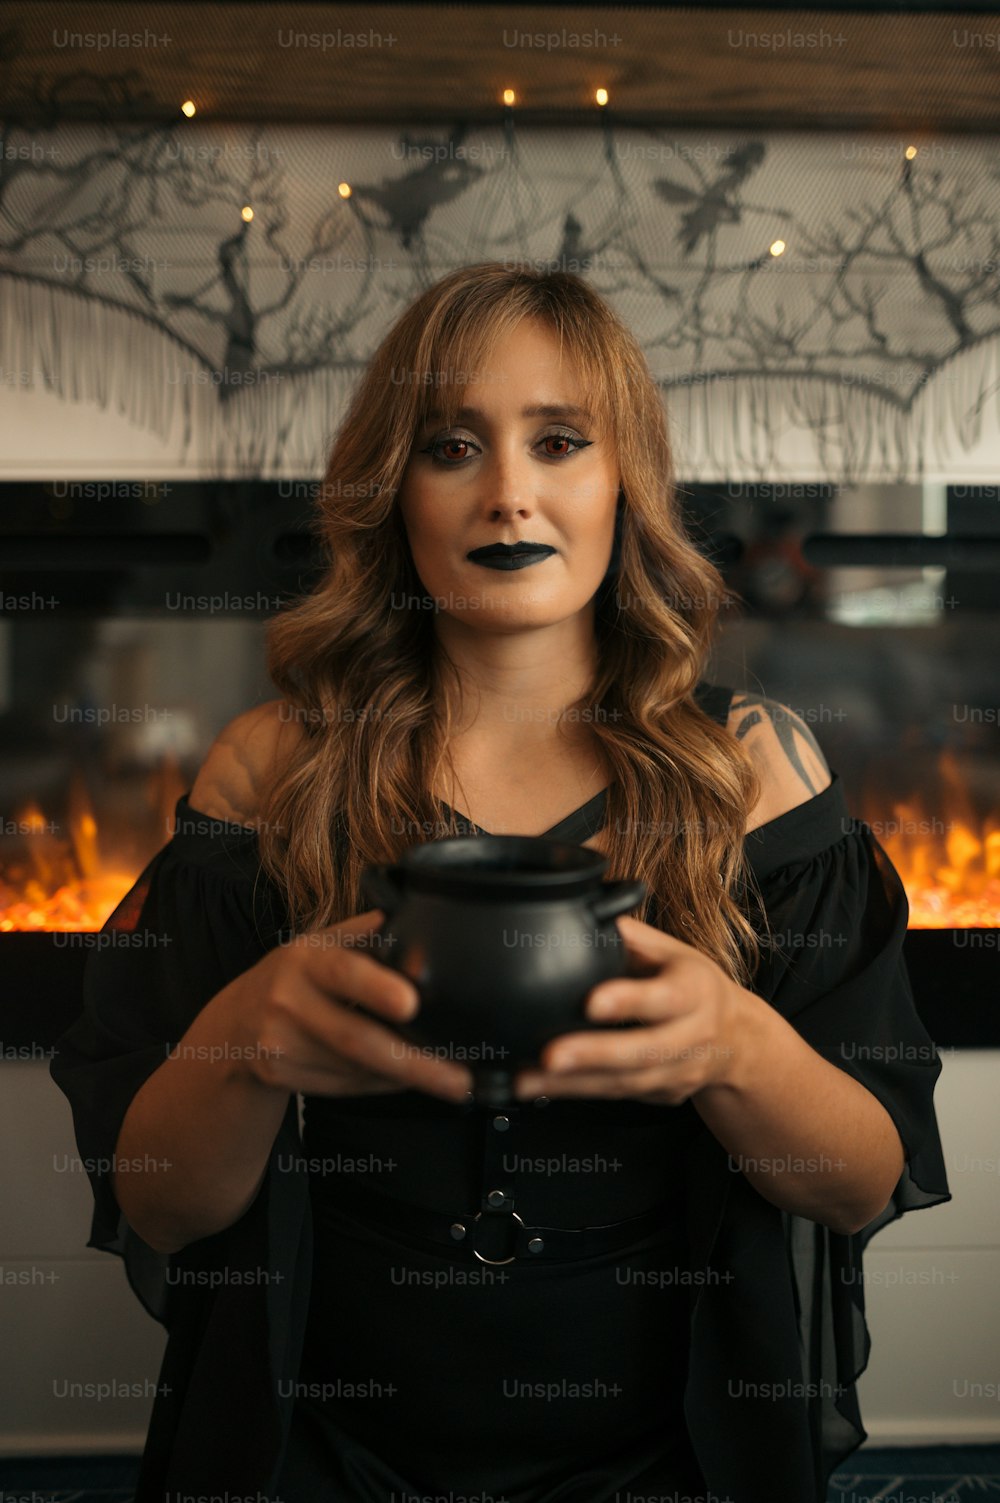 a woman in a black dress holding a black pot